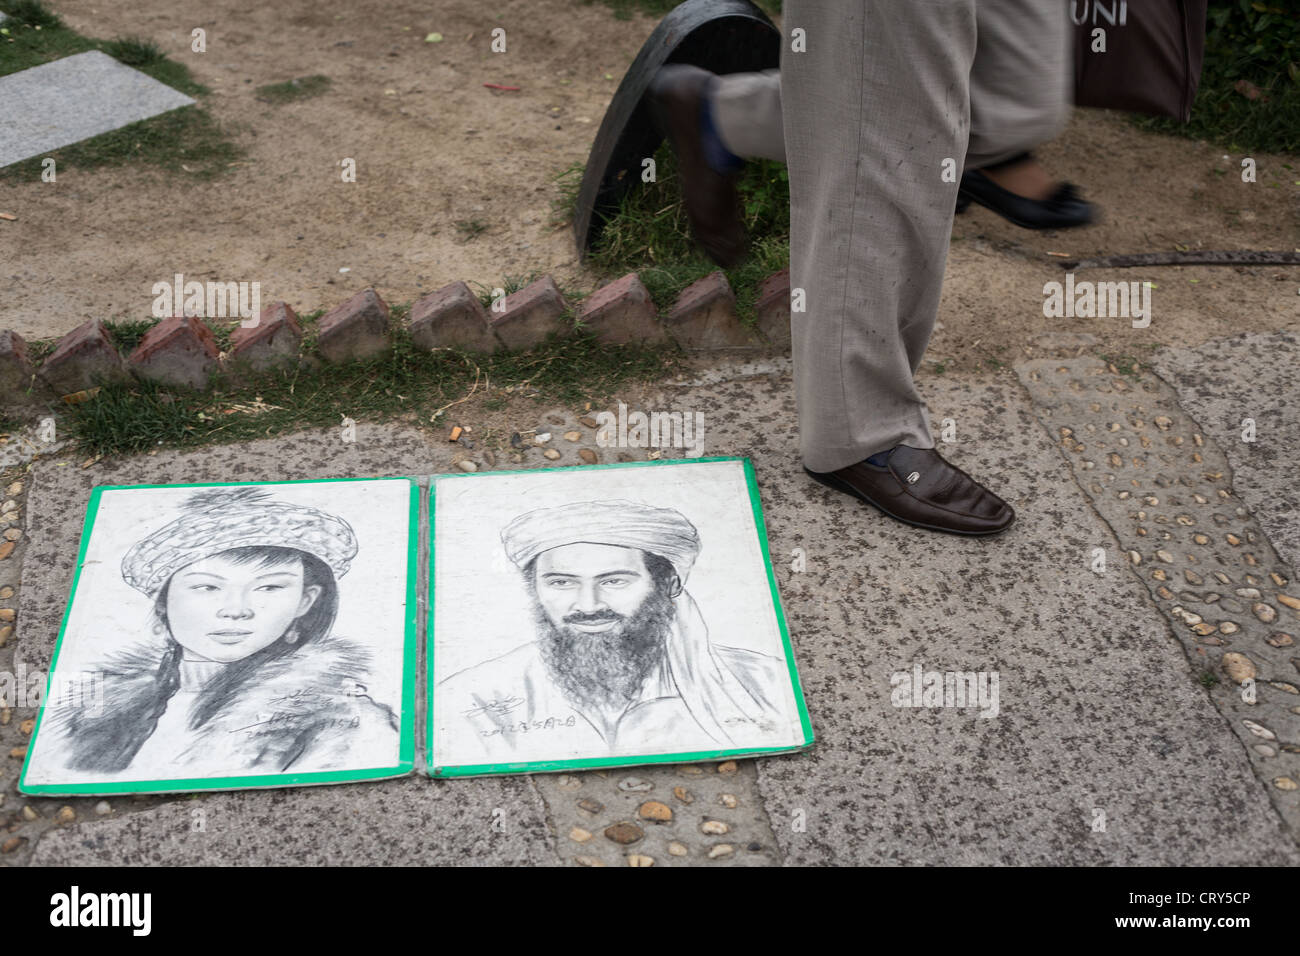 street artist's drawing of dead Al-Qaeda leader Osama Bin Laden, in Shanghai, China. Stock Photo